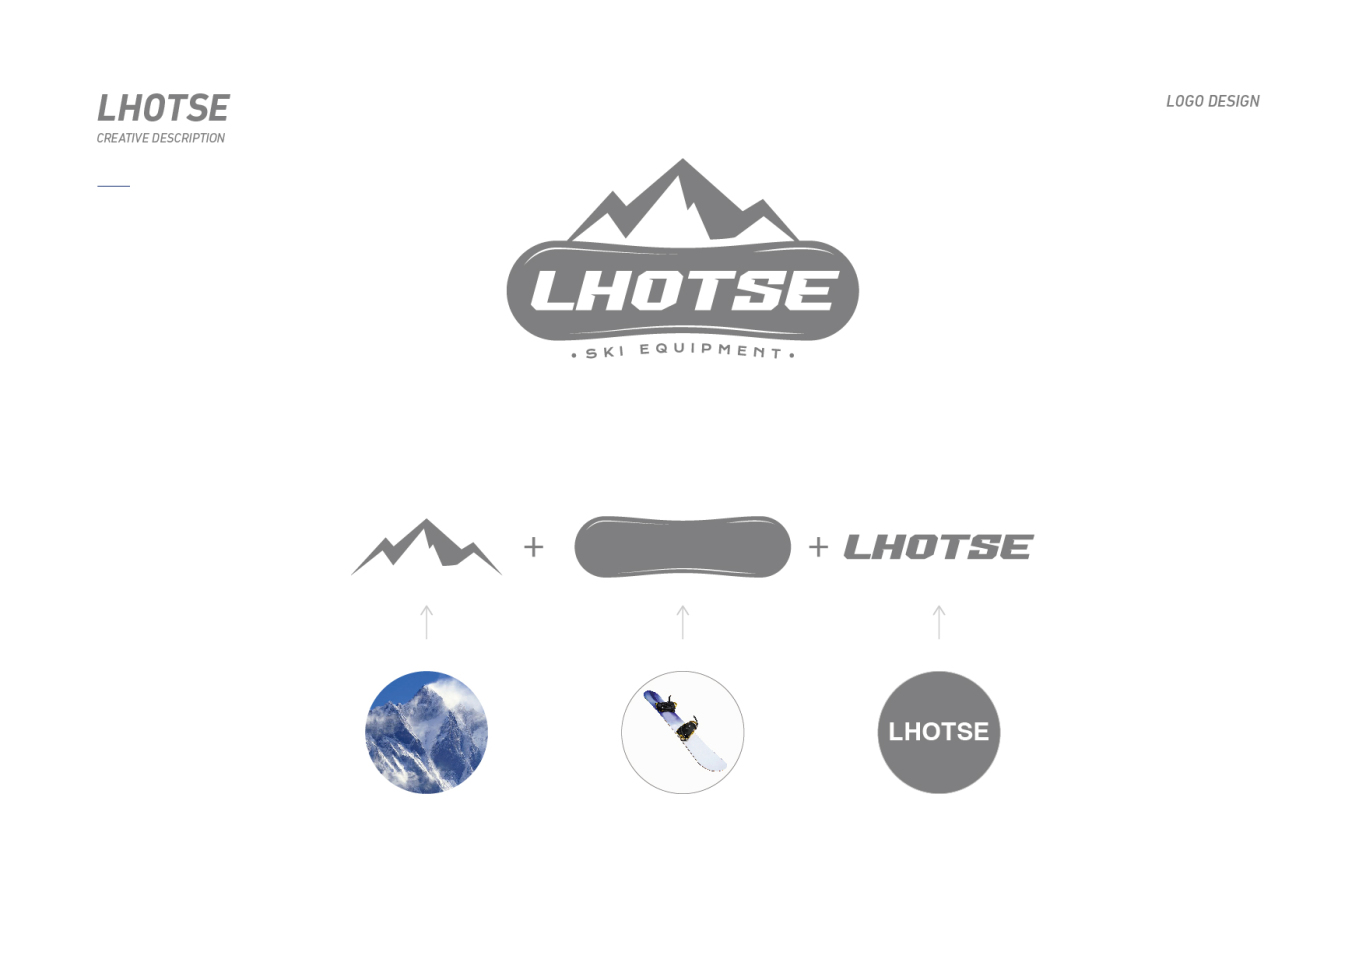 Lhotse滑雪器材logo設計圖2